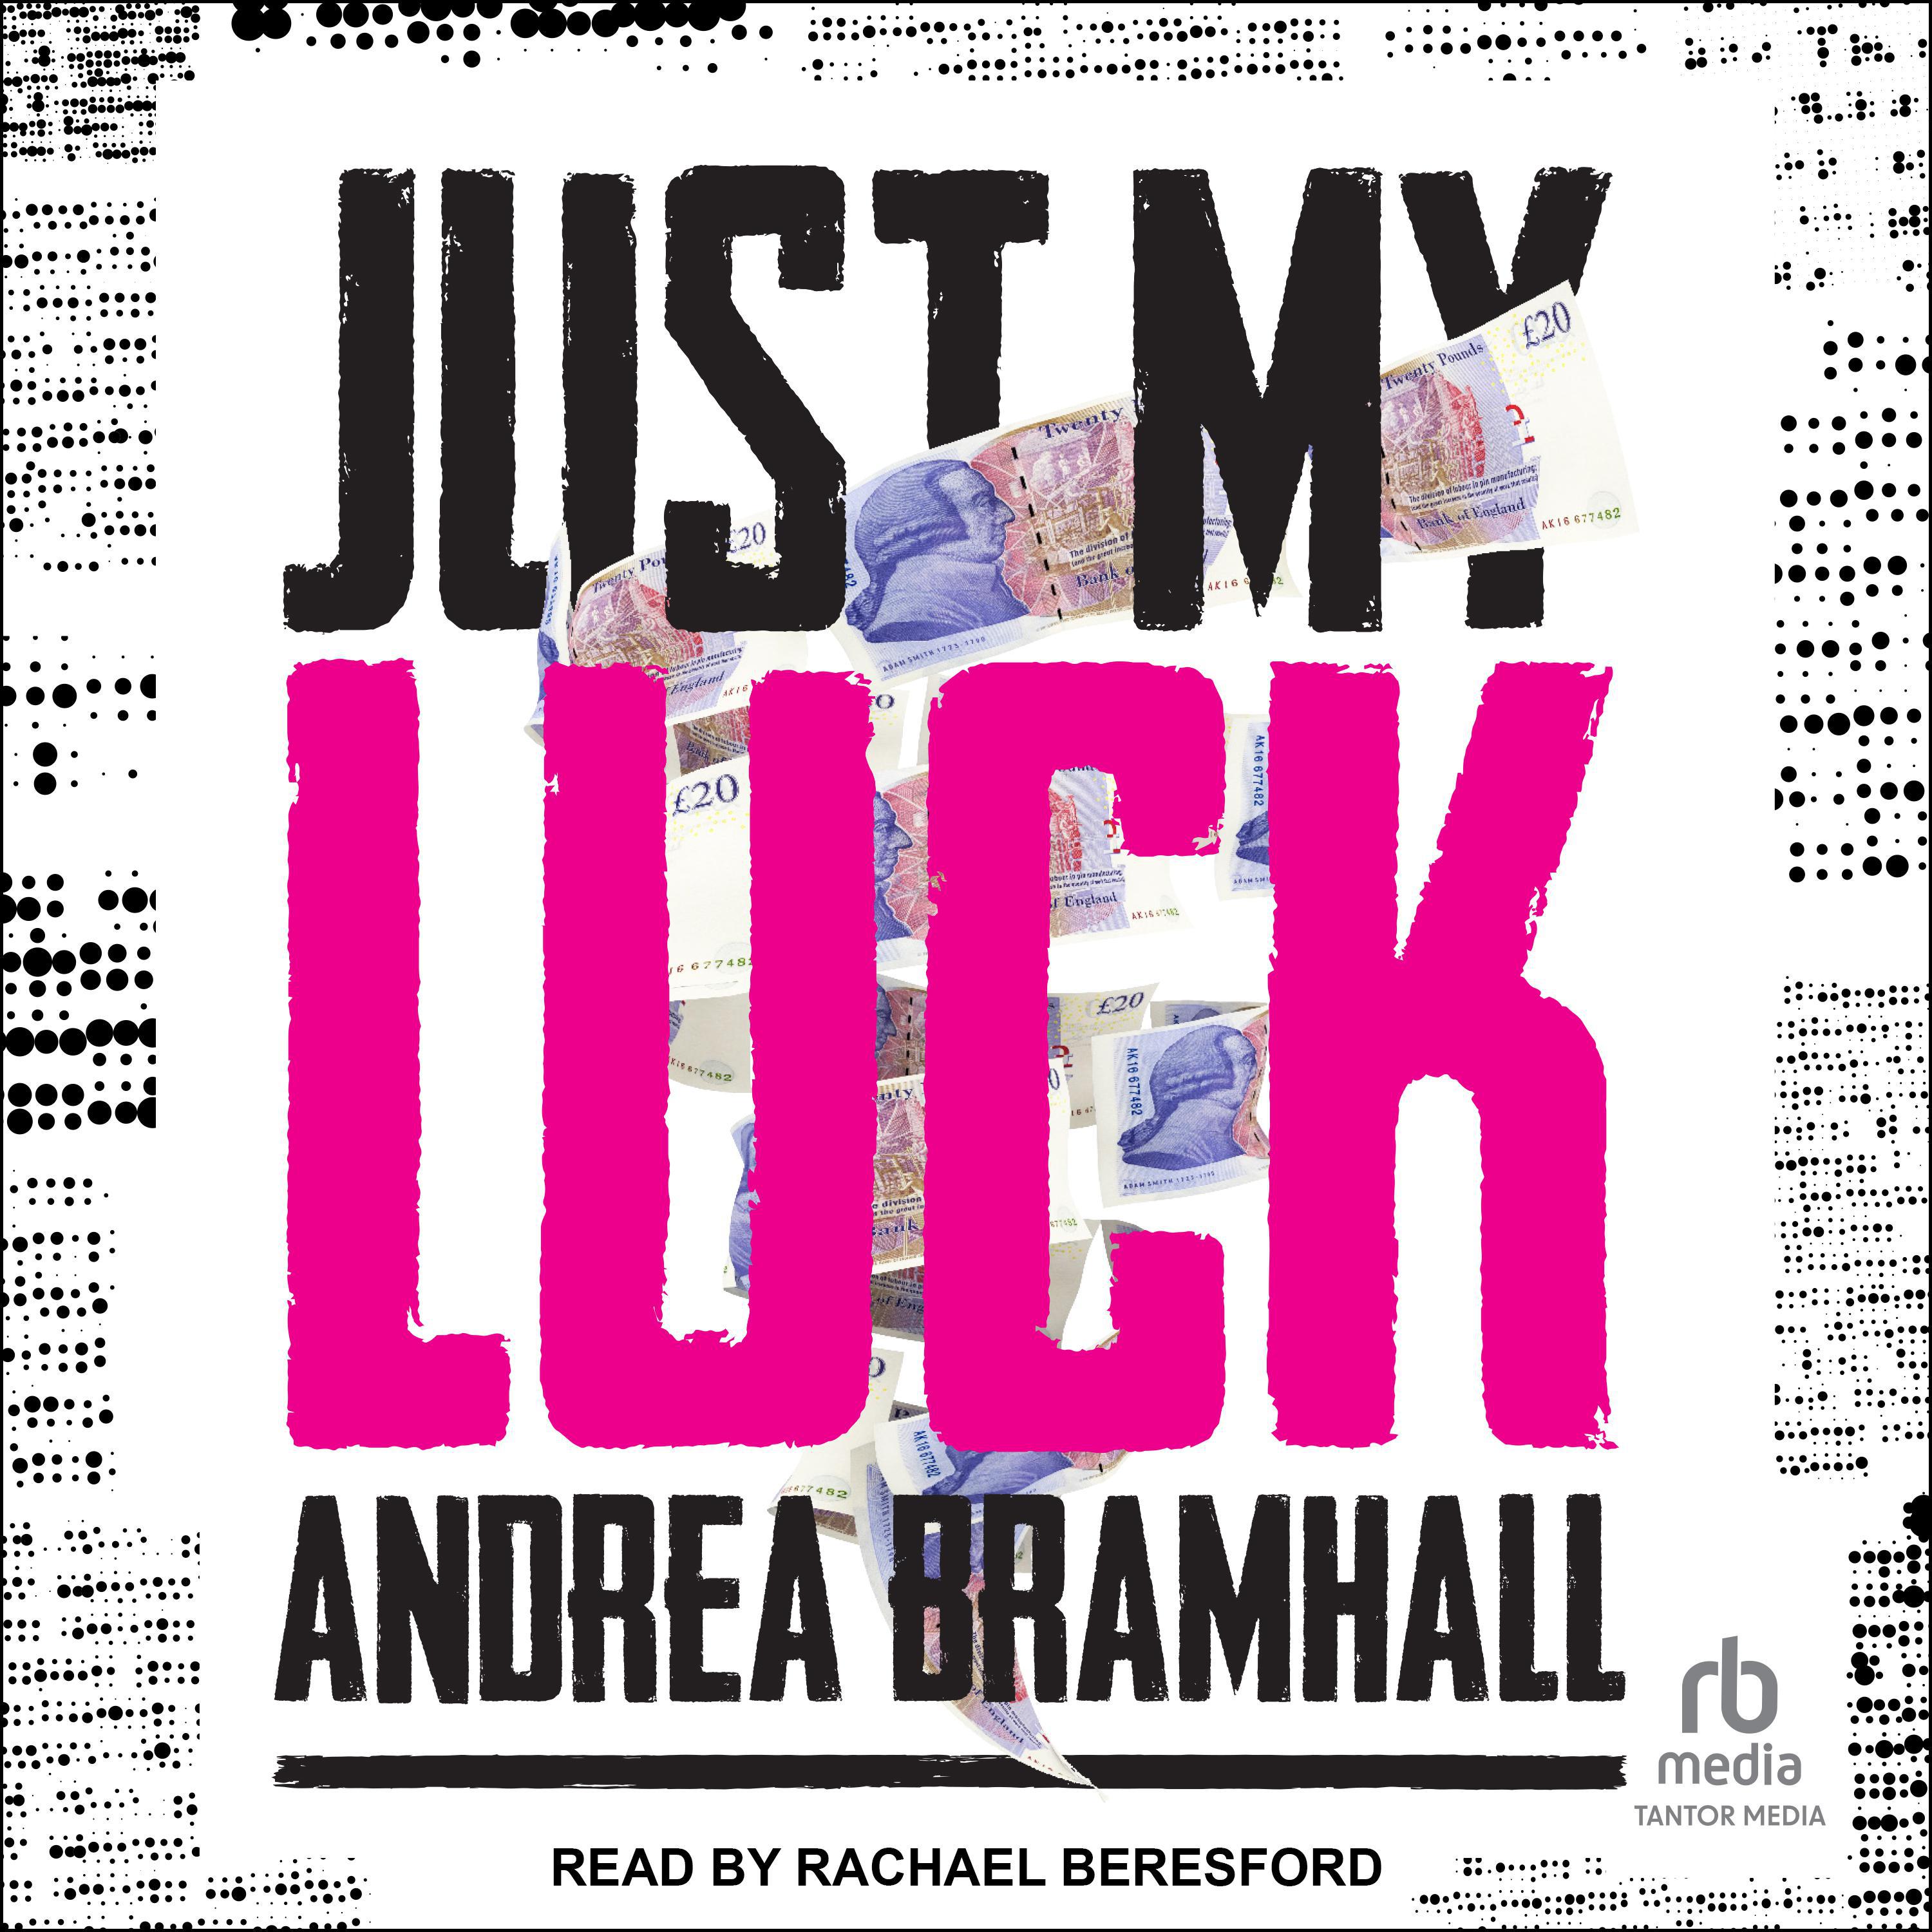 Andrea Bramhall, Rachael Beresford: Just My Luck (AudiobookFormat, 2022, Tantor Audio)